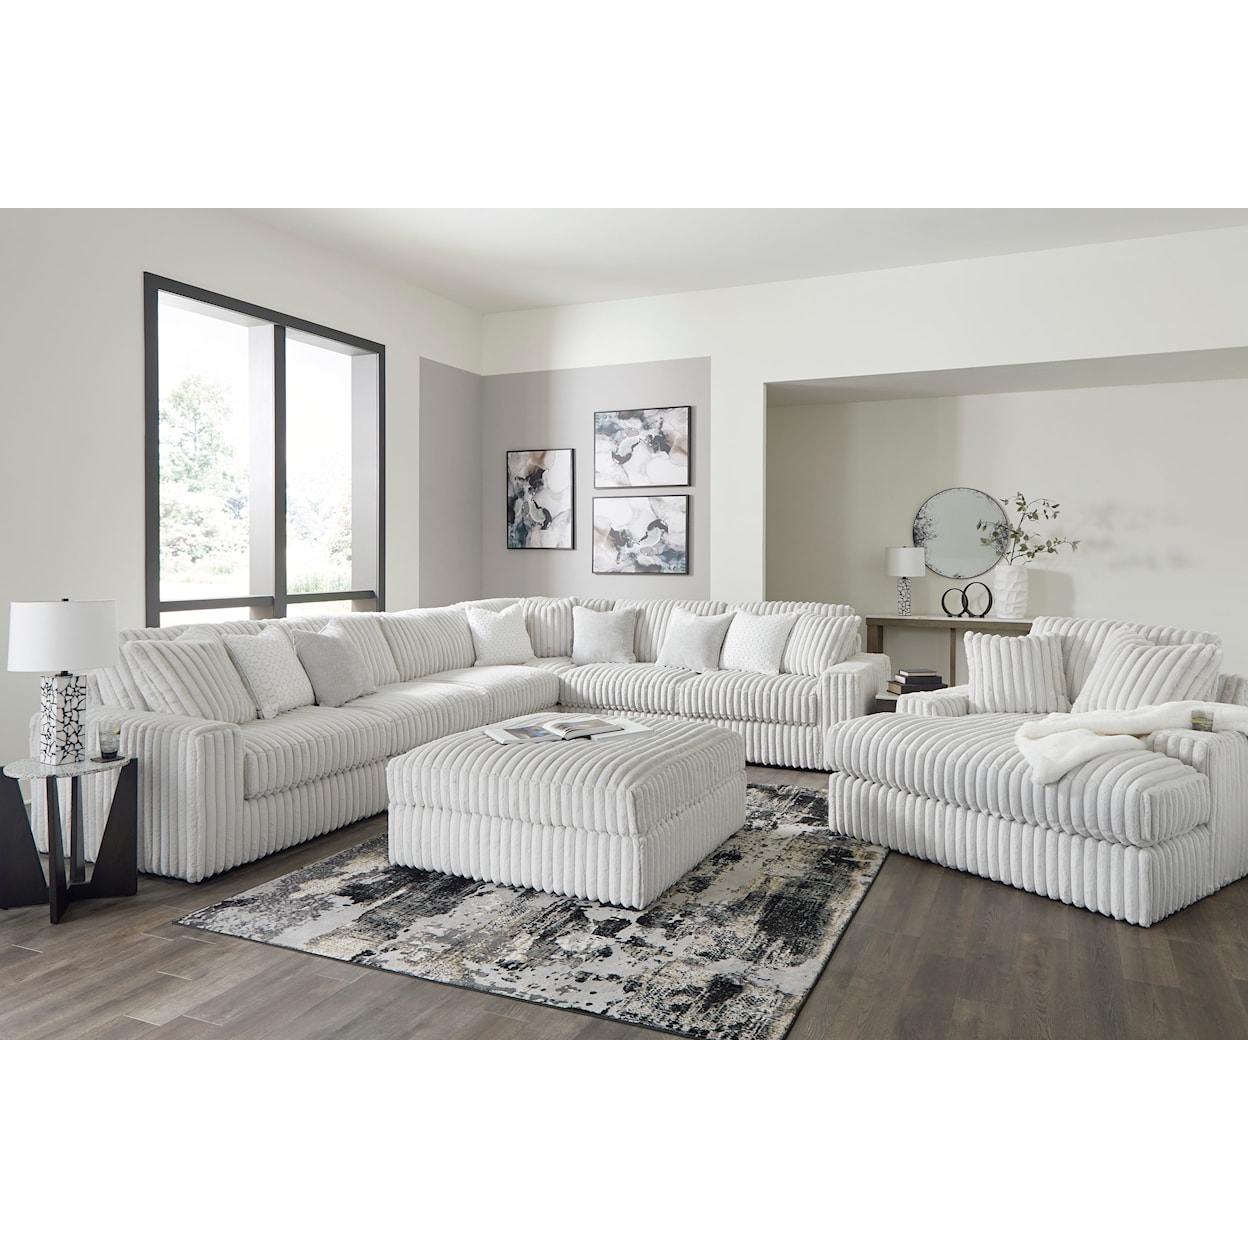 Signature Design by Ashley Furniture Stupendous Living Room Set